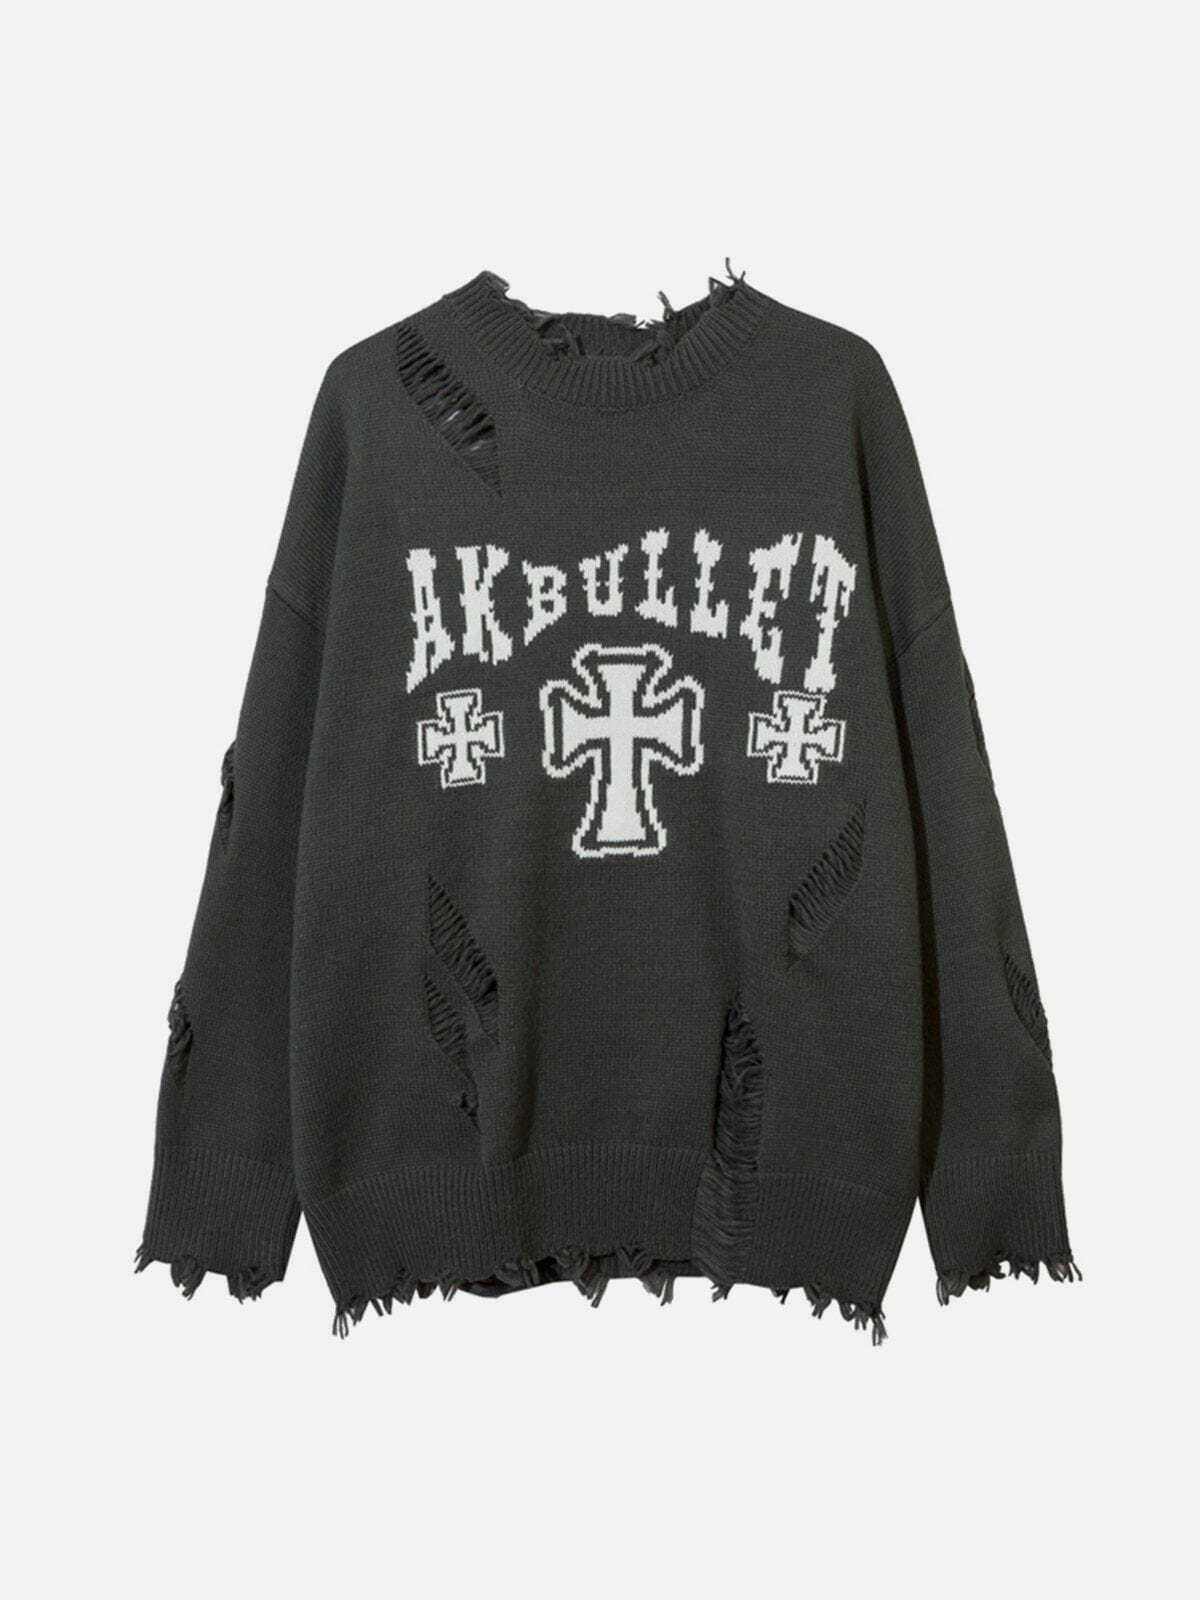 graphic cross sweater edgy & retro streetwear 8834